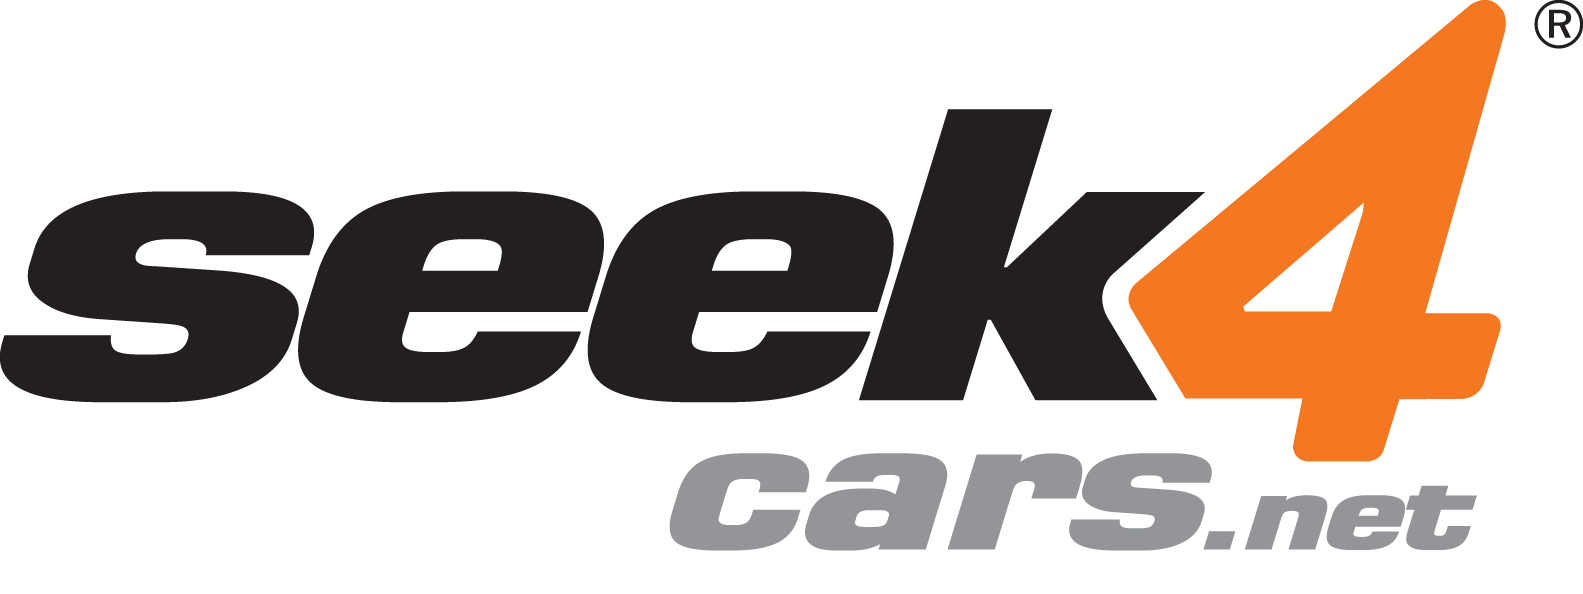 seek4cars-logo.png